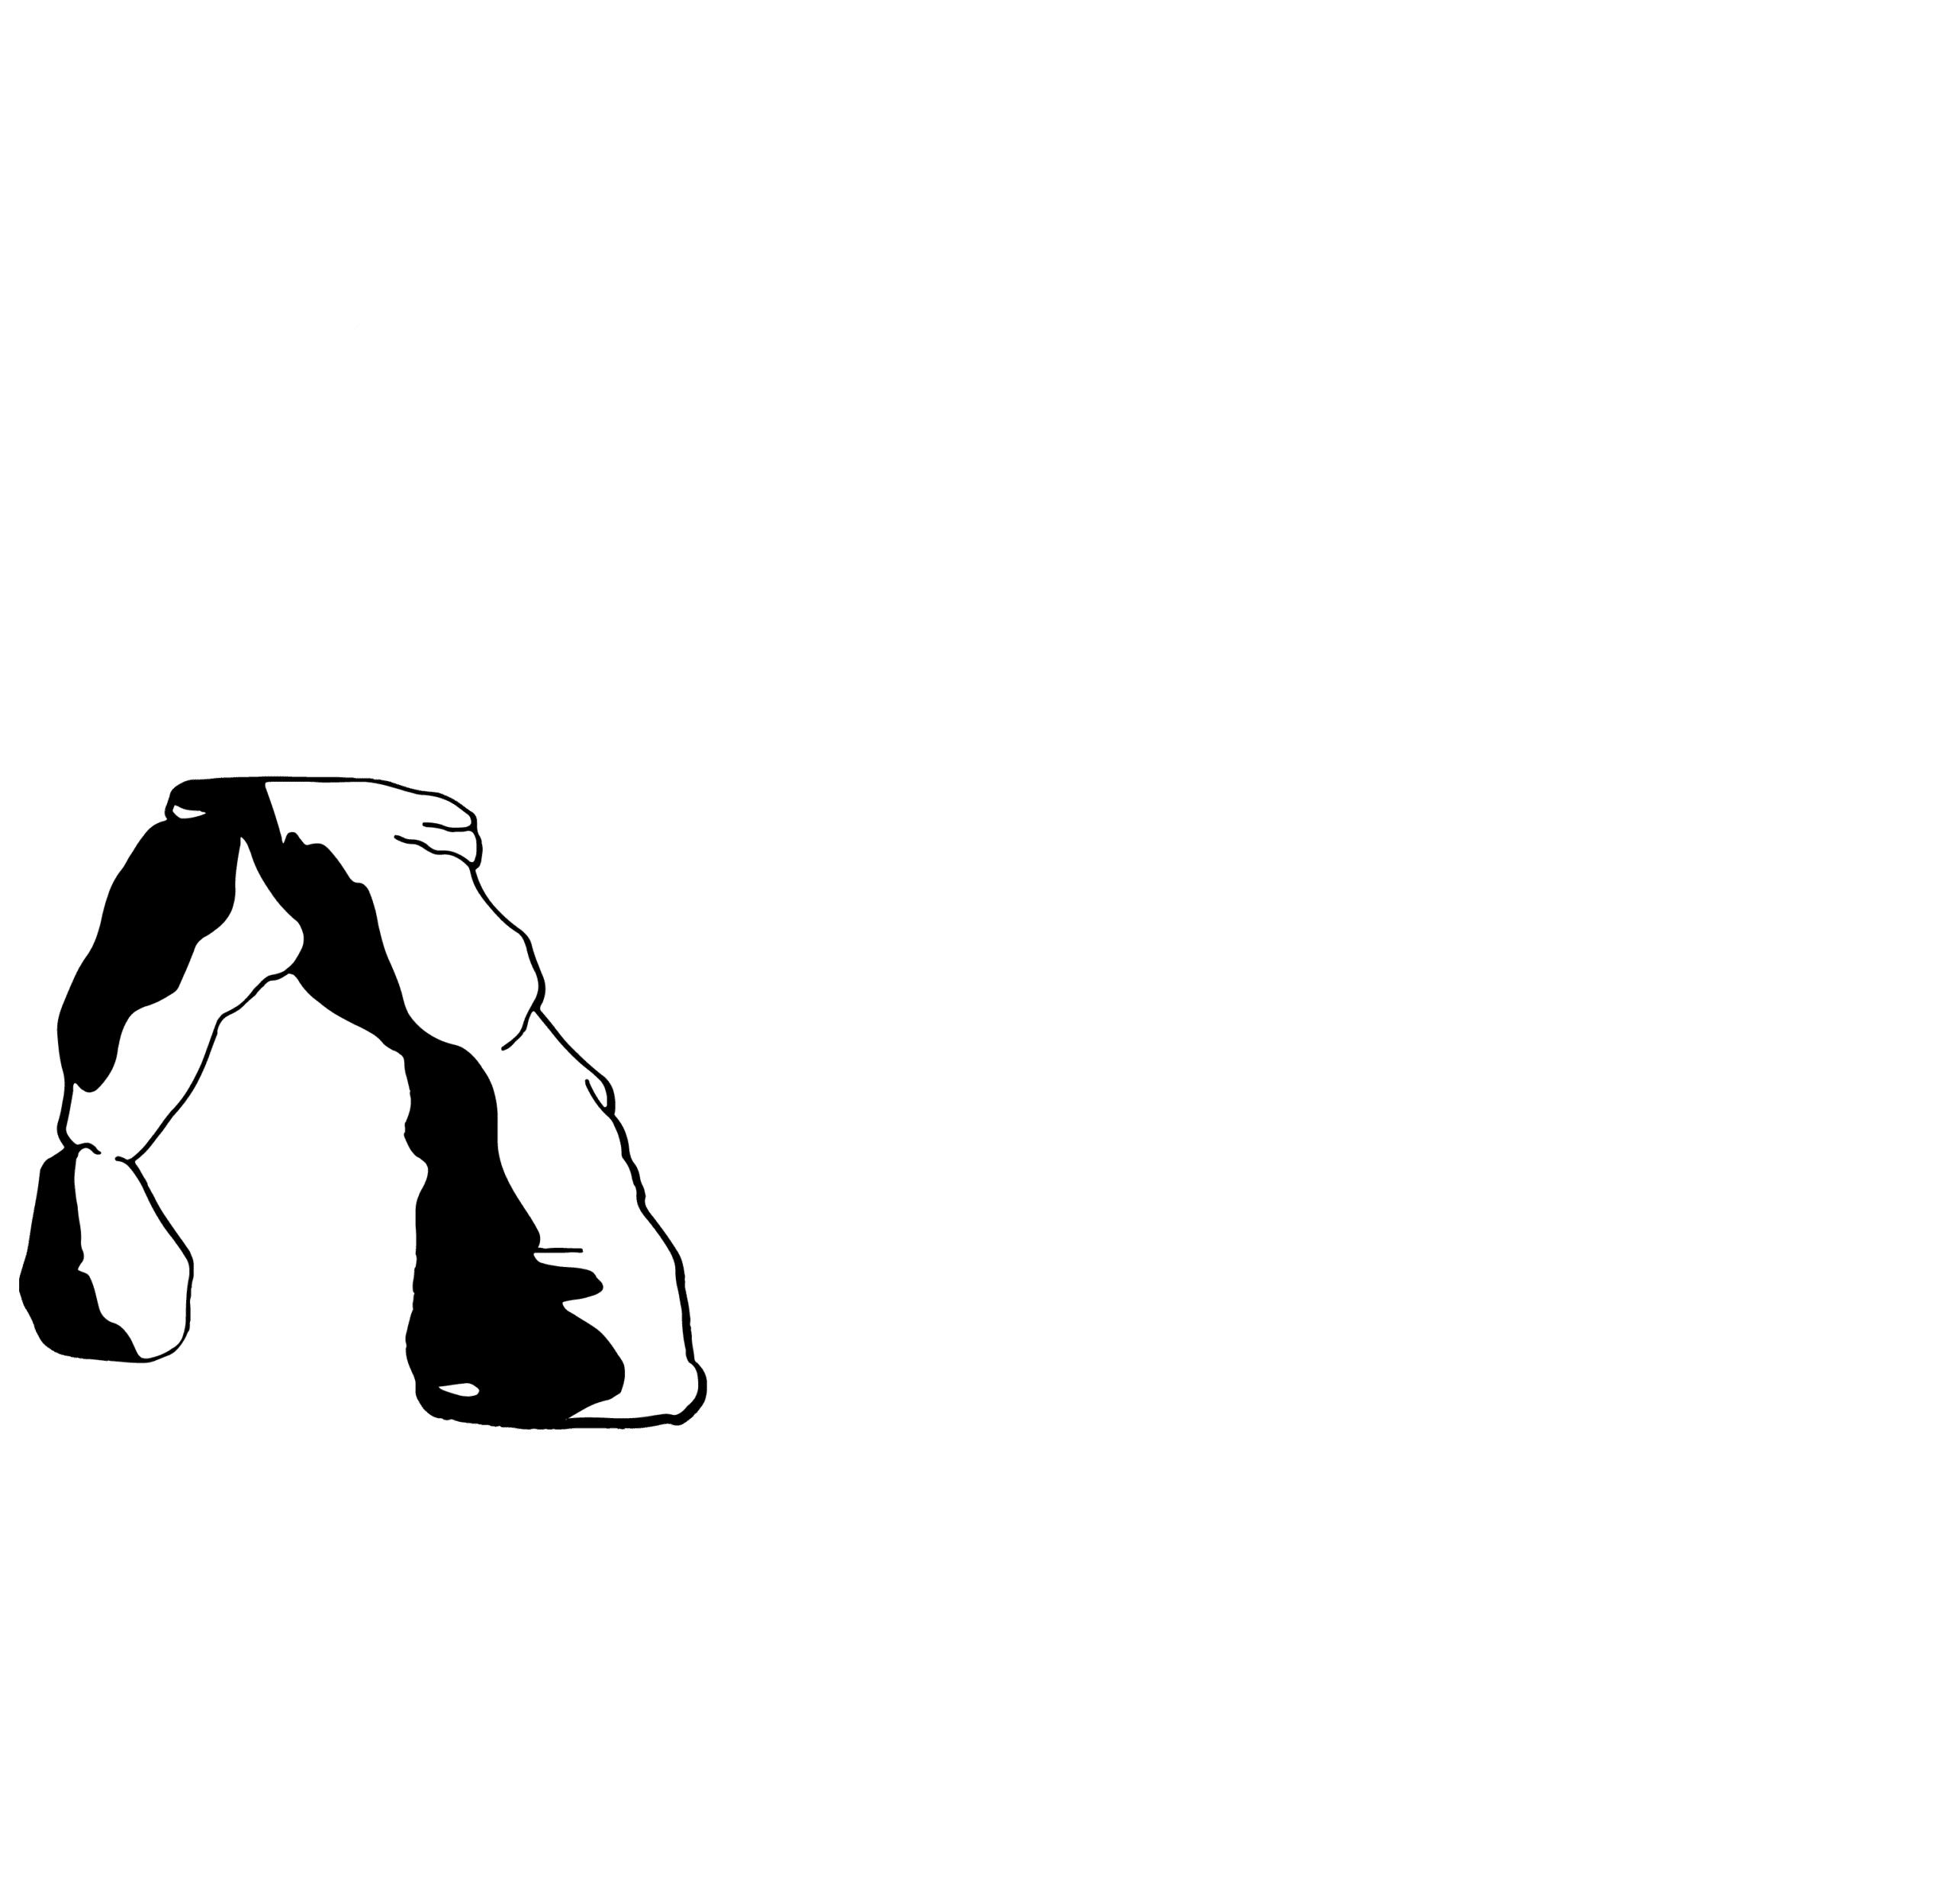 Best in KLAS Technical Services 2020